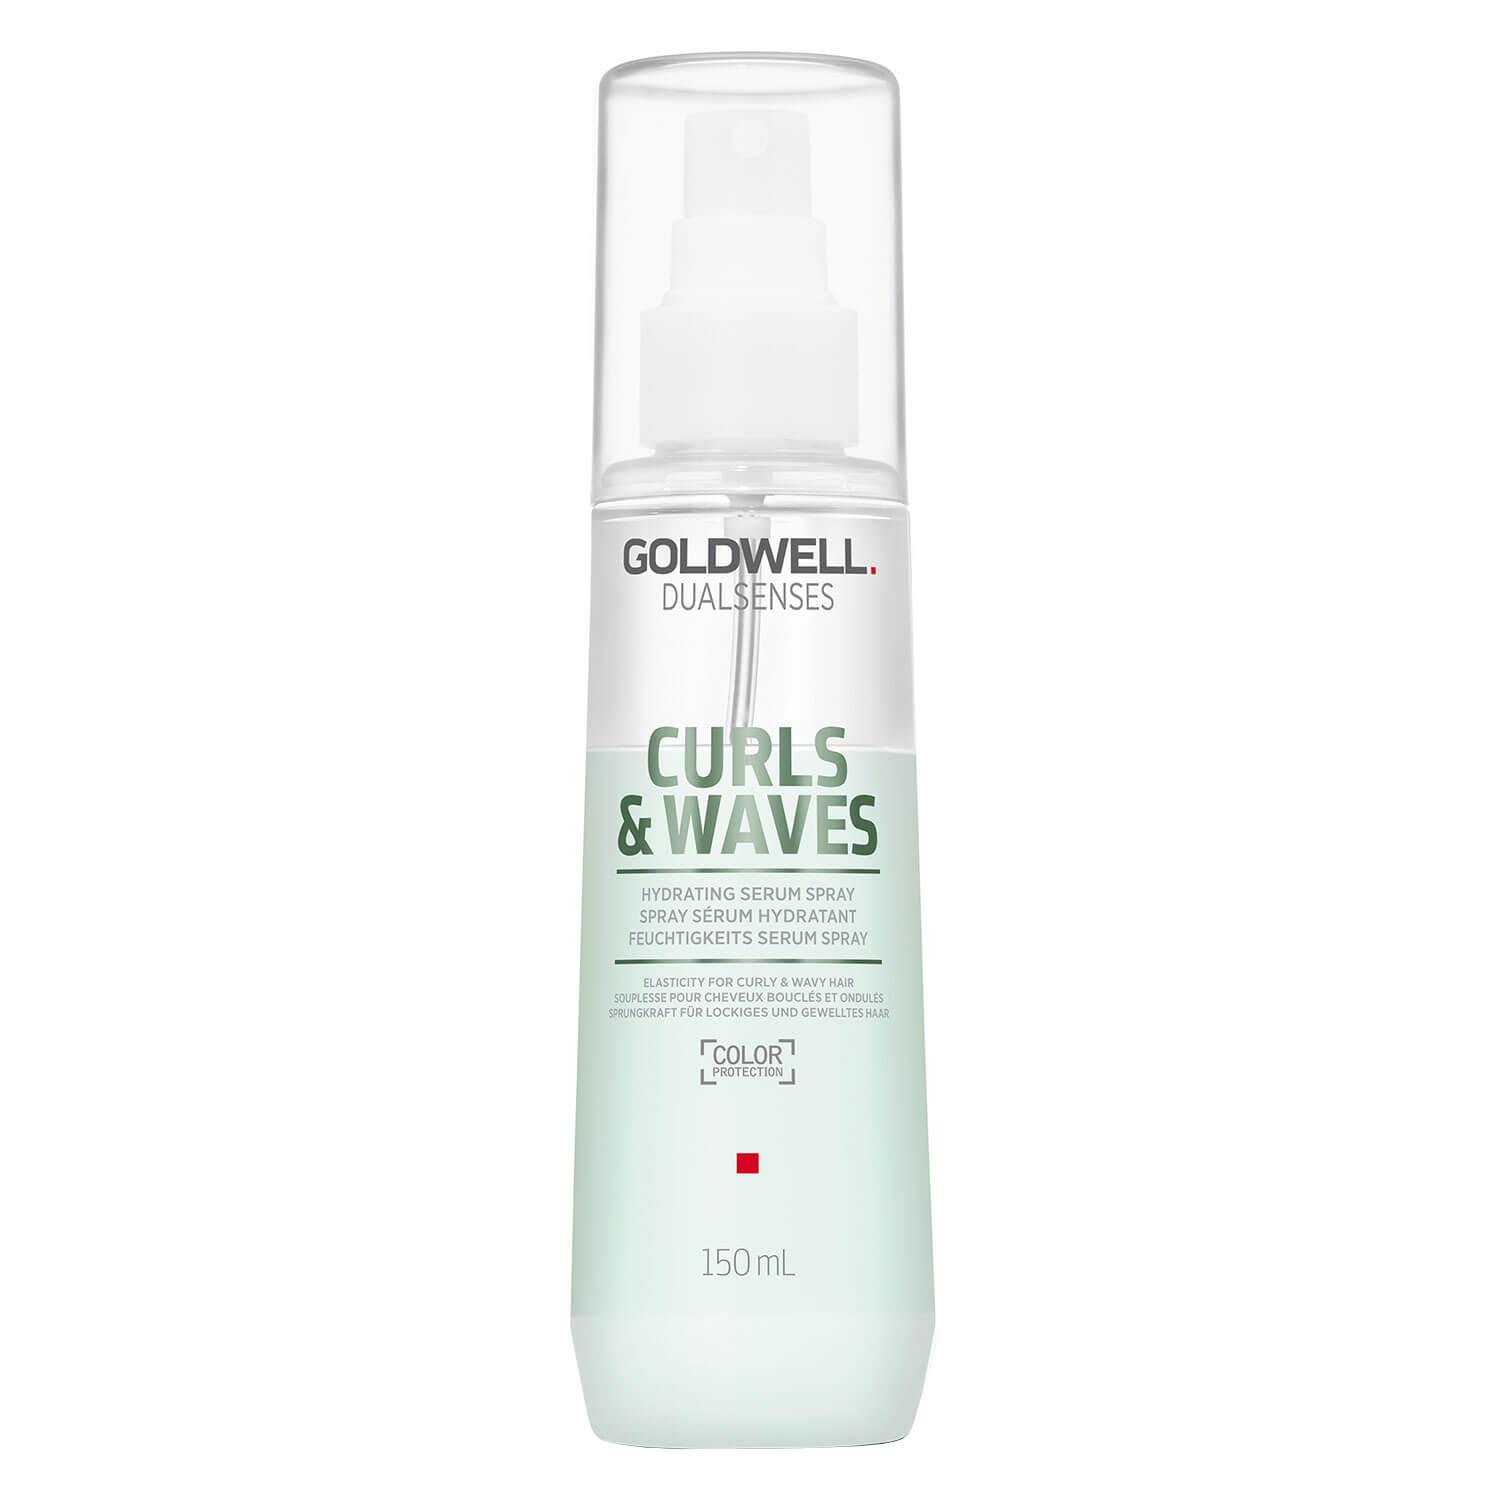 Dualsenses Curls & Waves - Hydrating Serum Spray